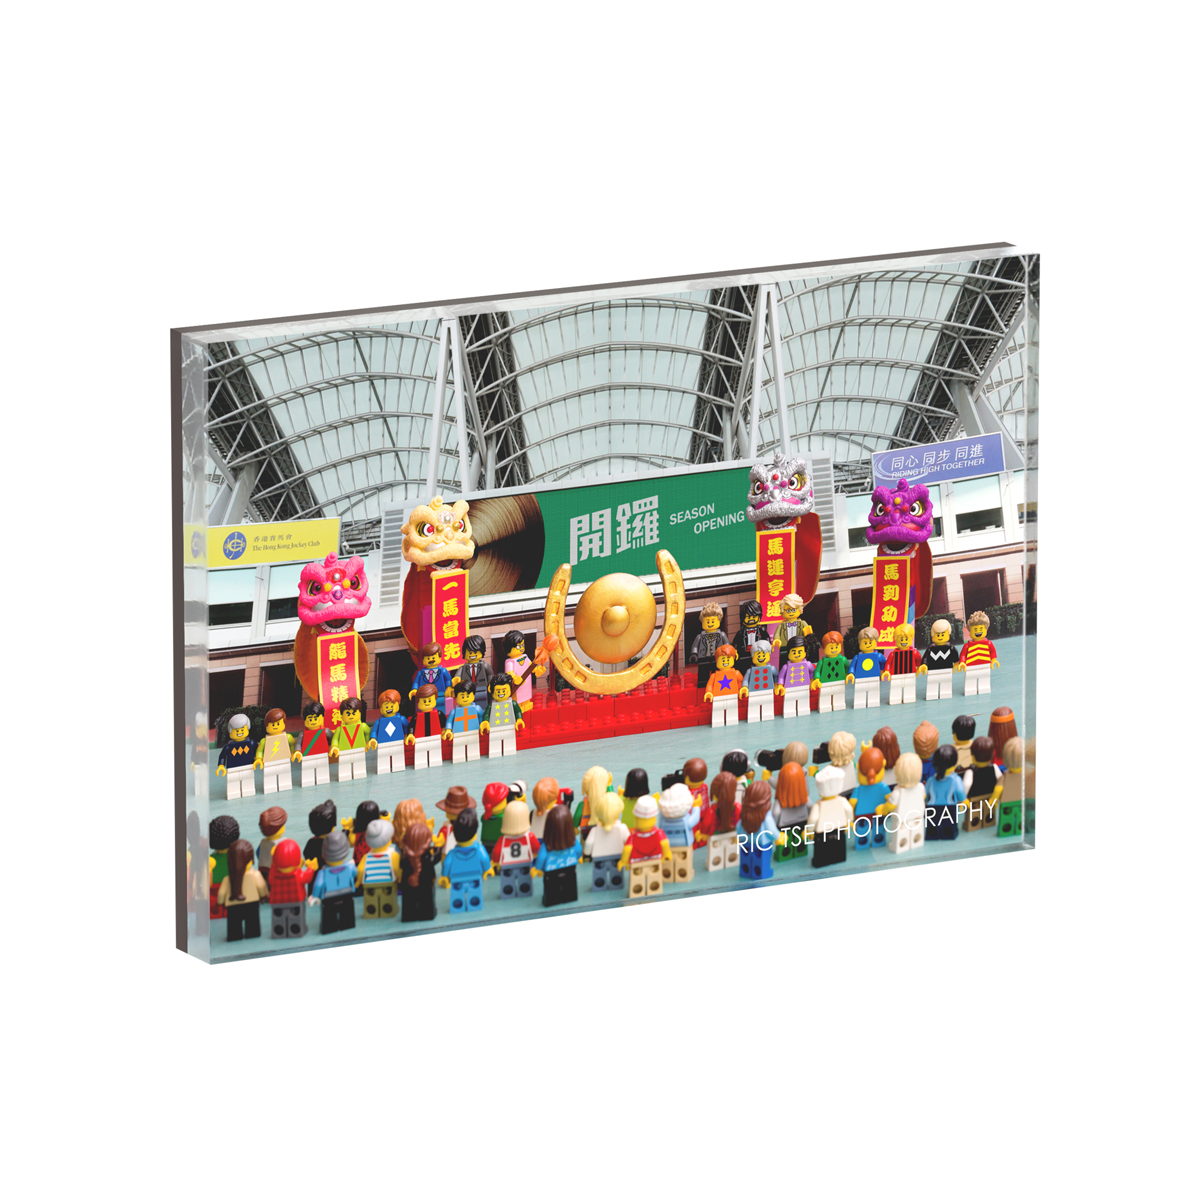 「Ric Tse Legography x 香港馬場」系列磁石